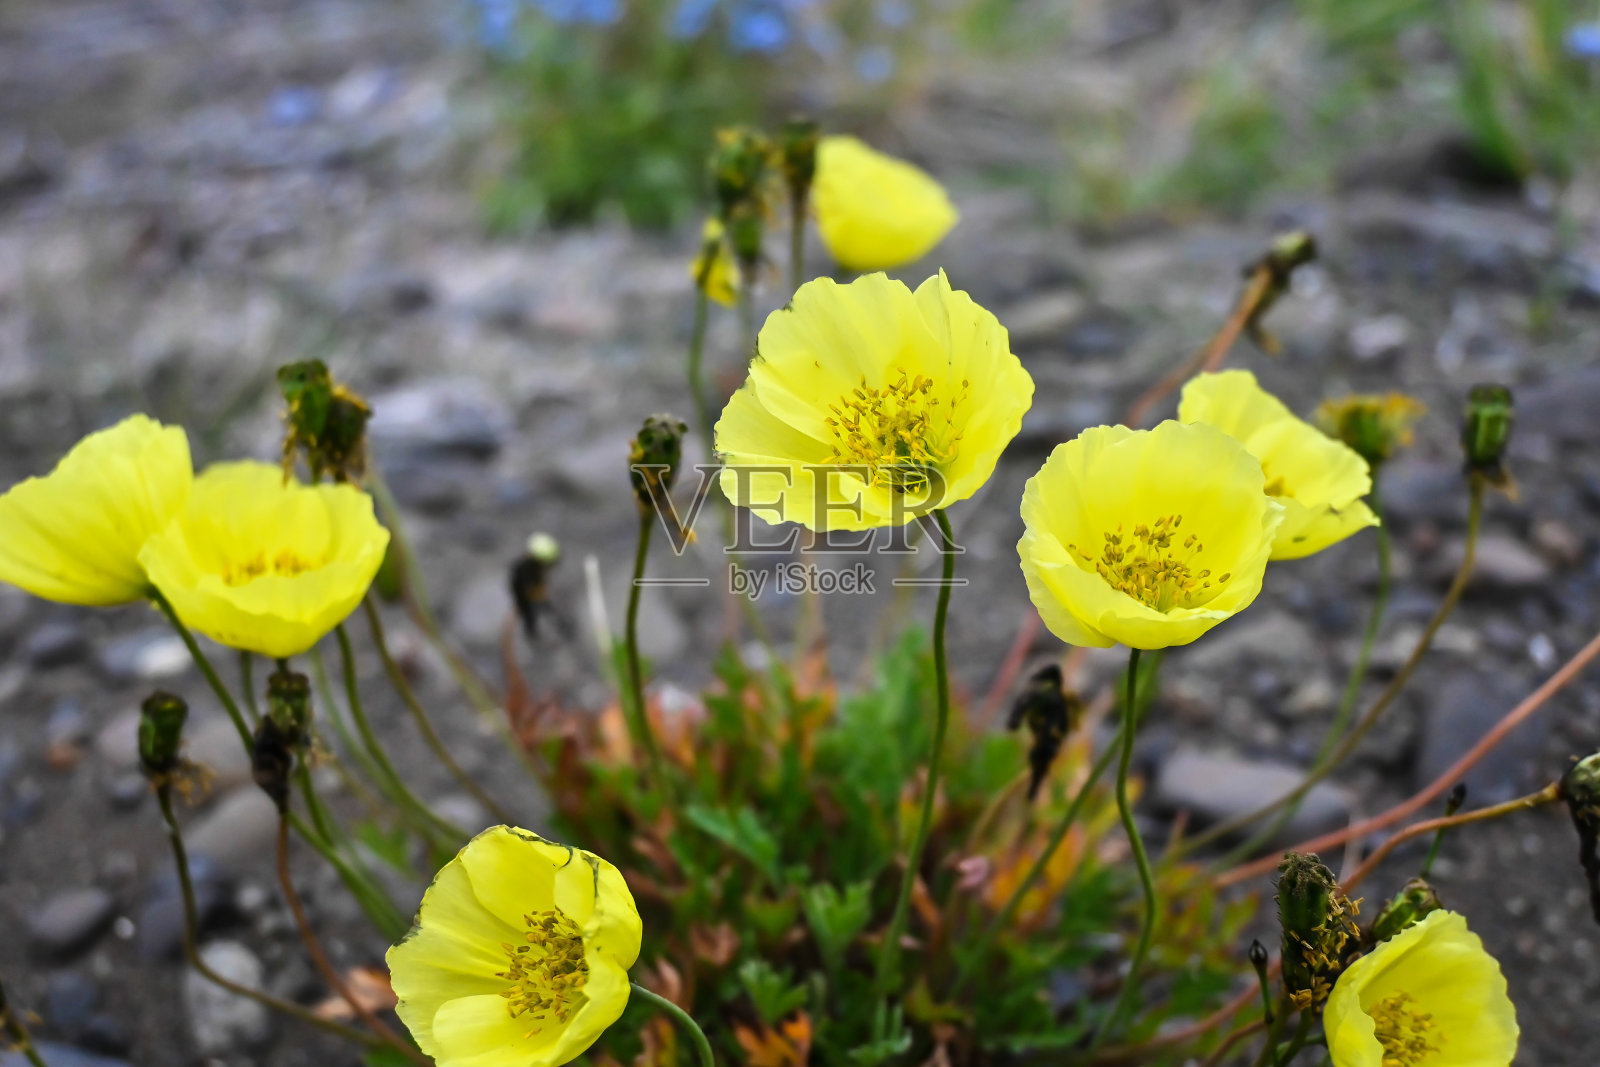 Putorana高原上的花朵。照片摄影图片